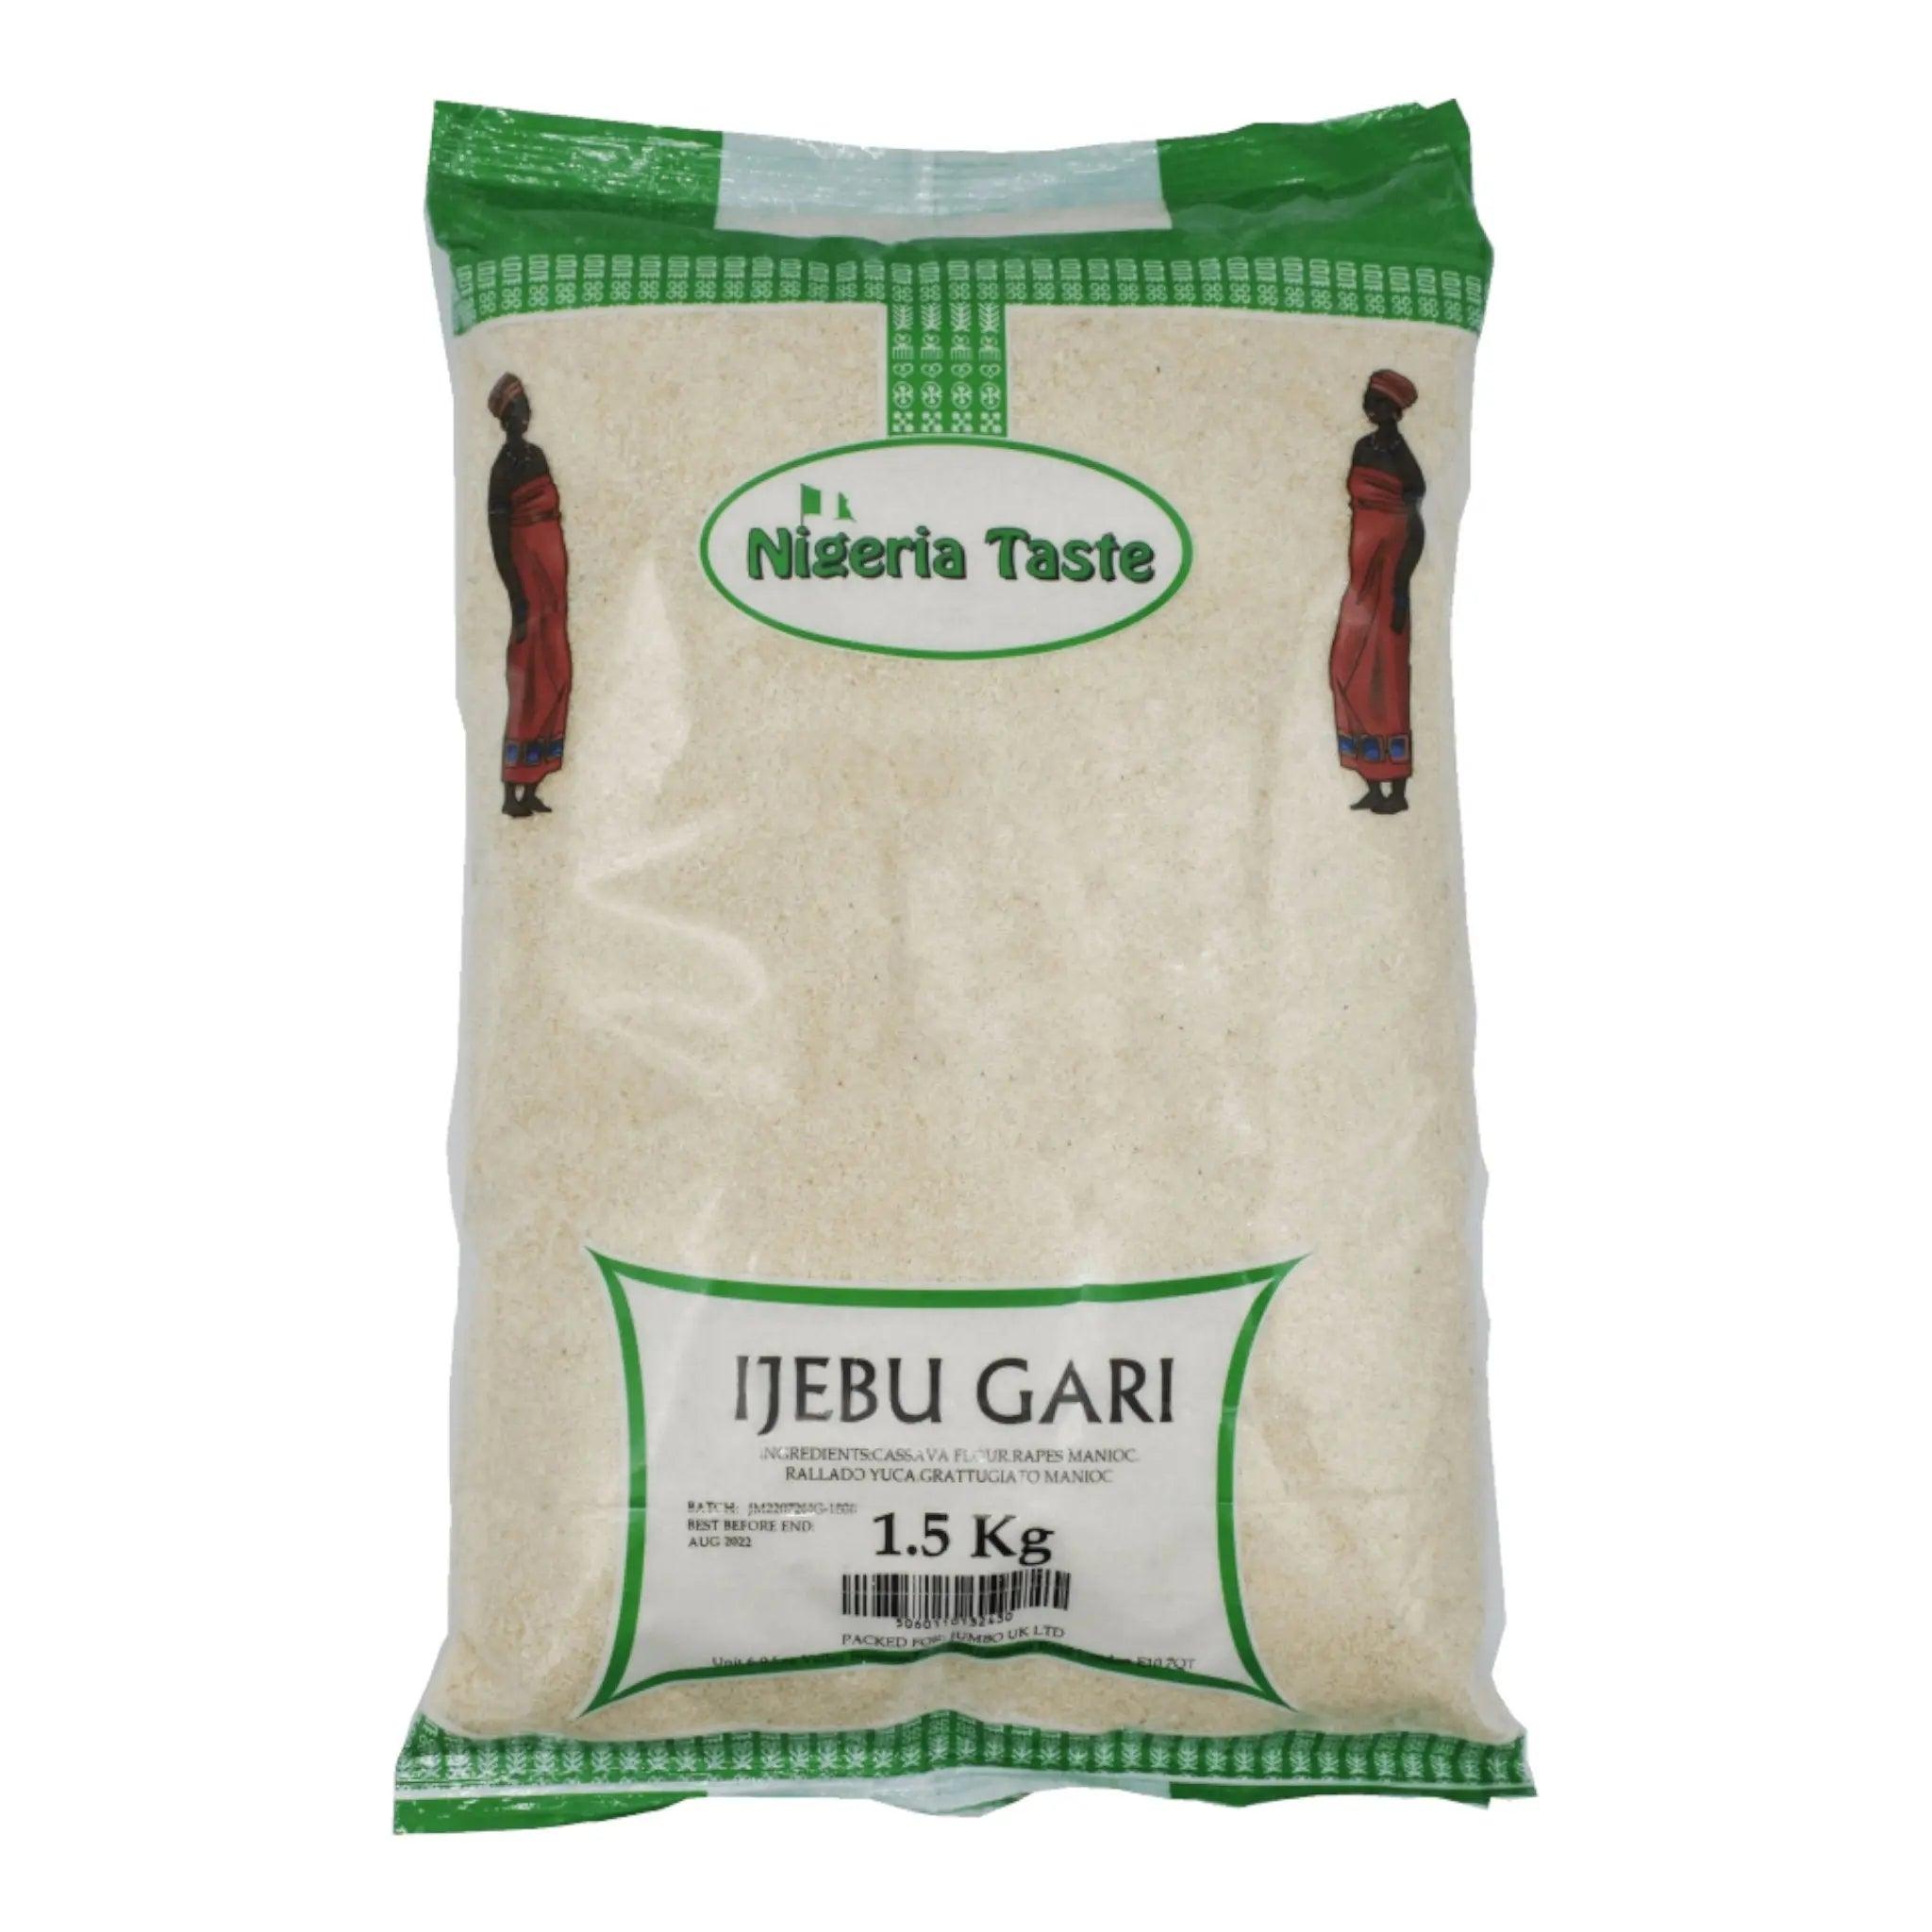 Nigeria Taste Ijebu Gari - Honesty Sales U.K